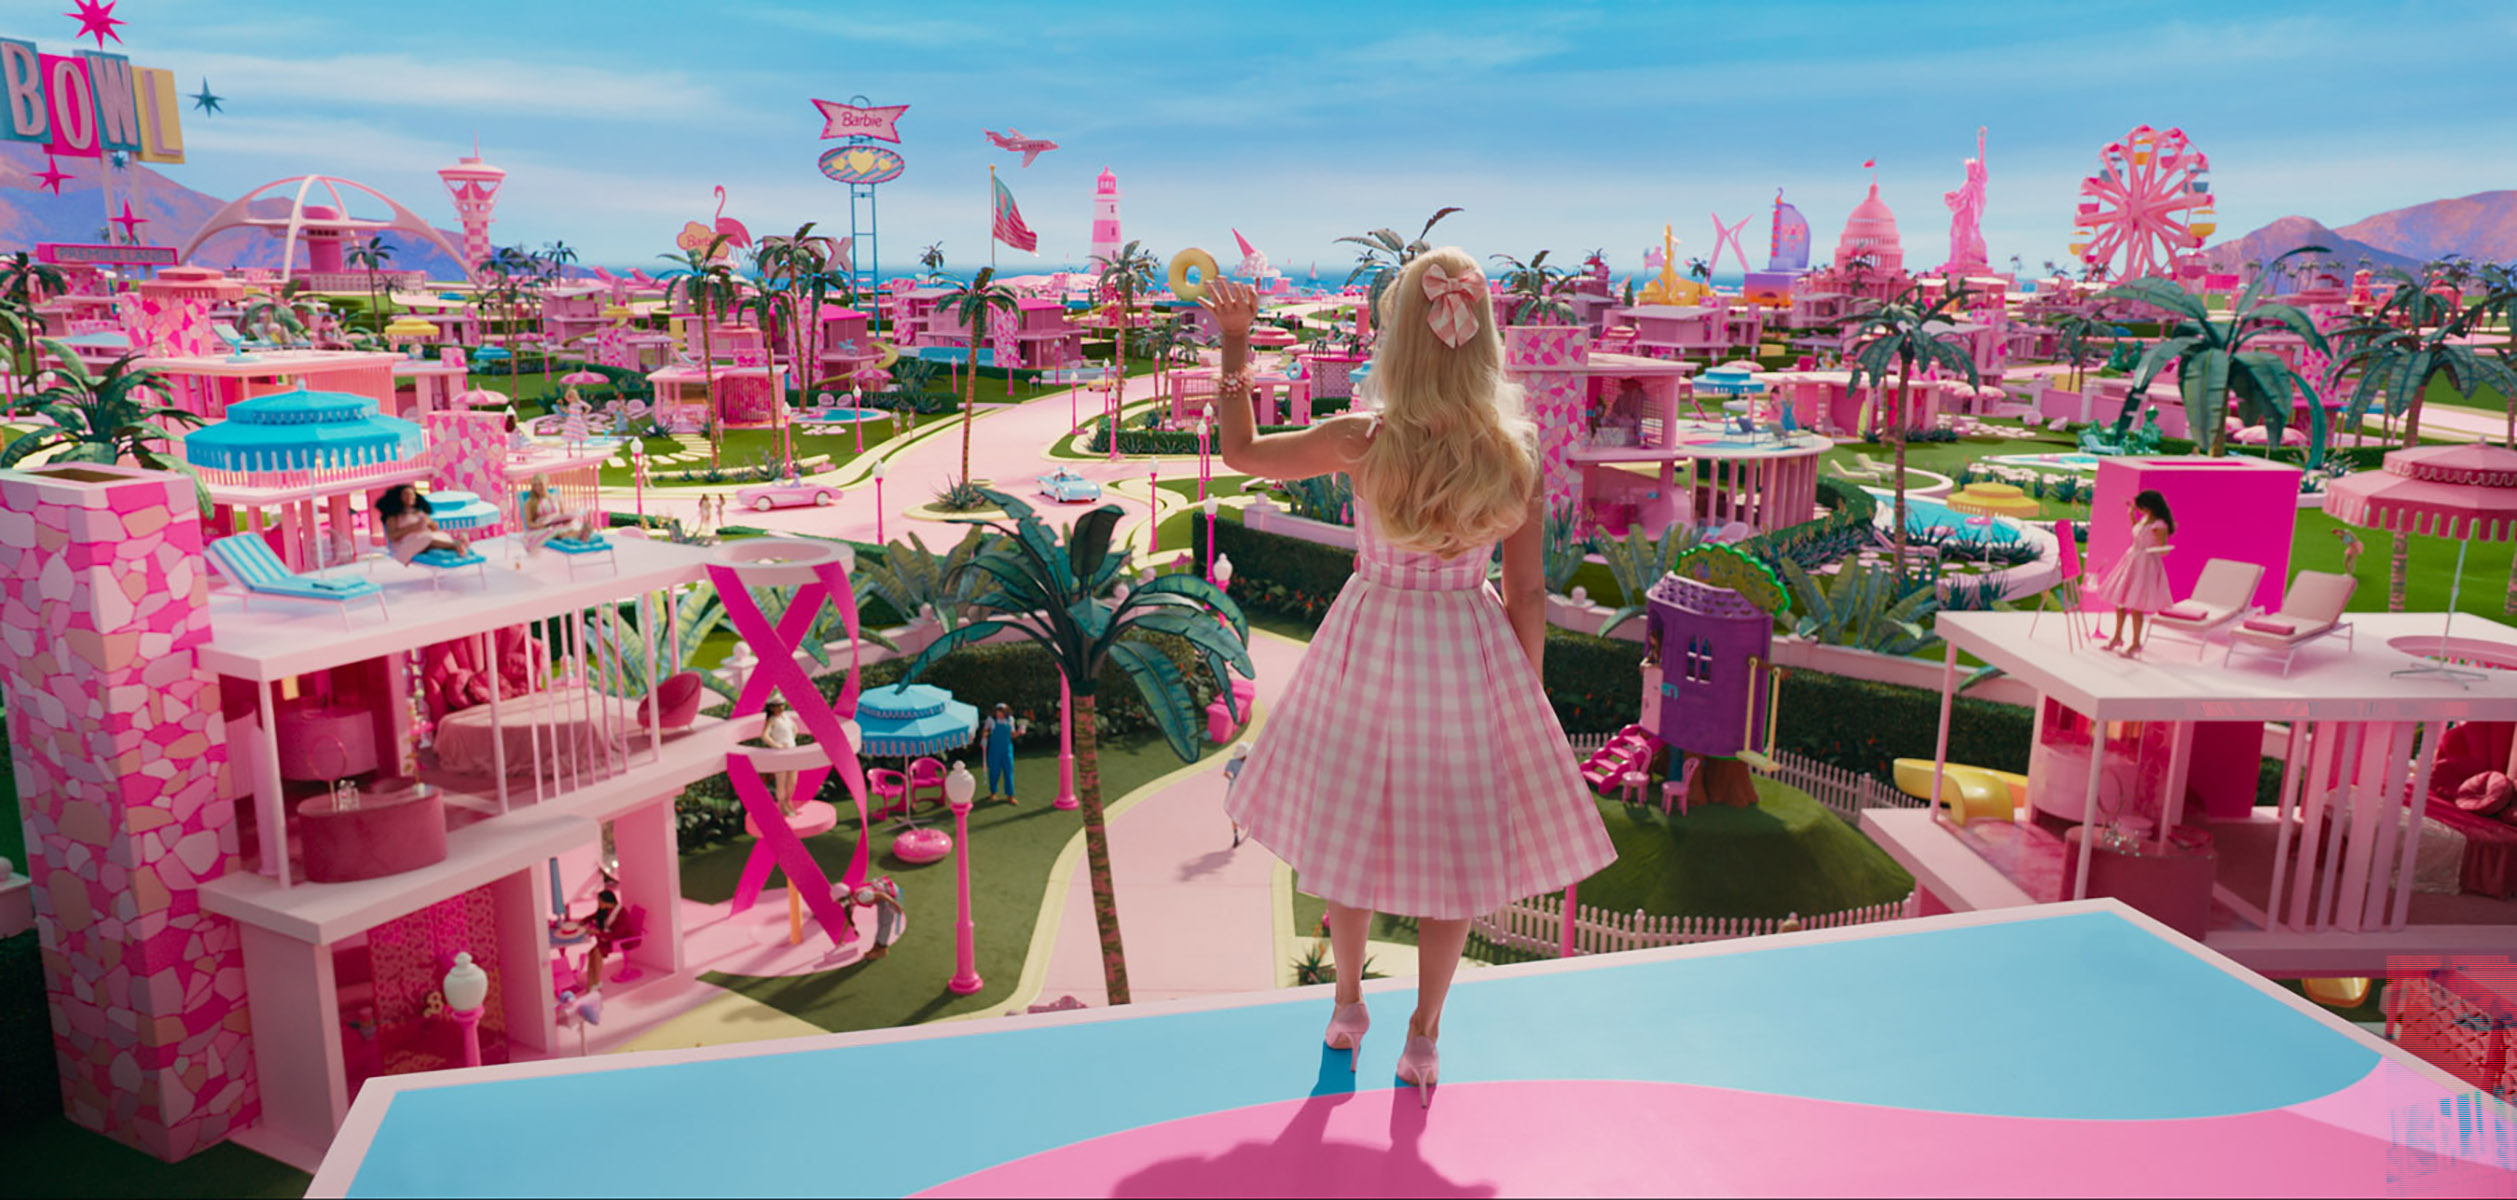 Barbieland photo courtesy Warner Bros. Pictures